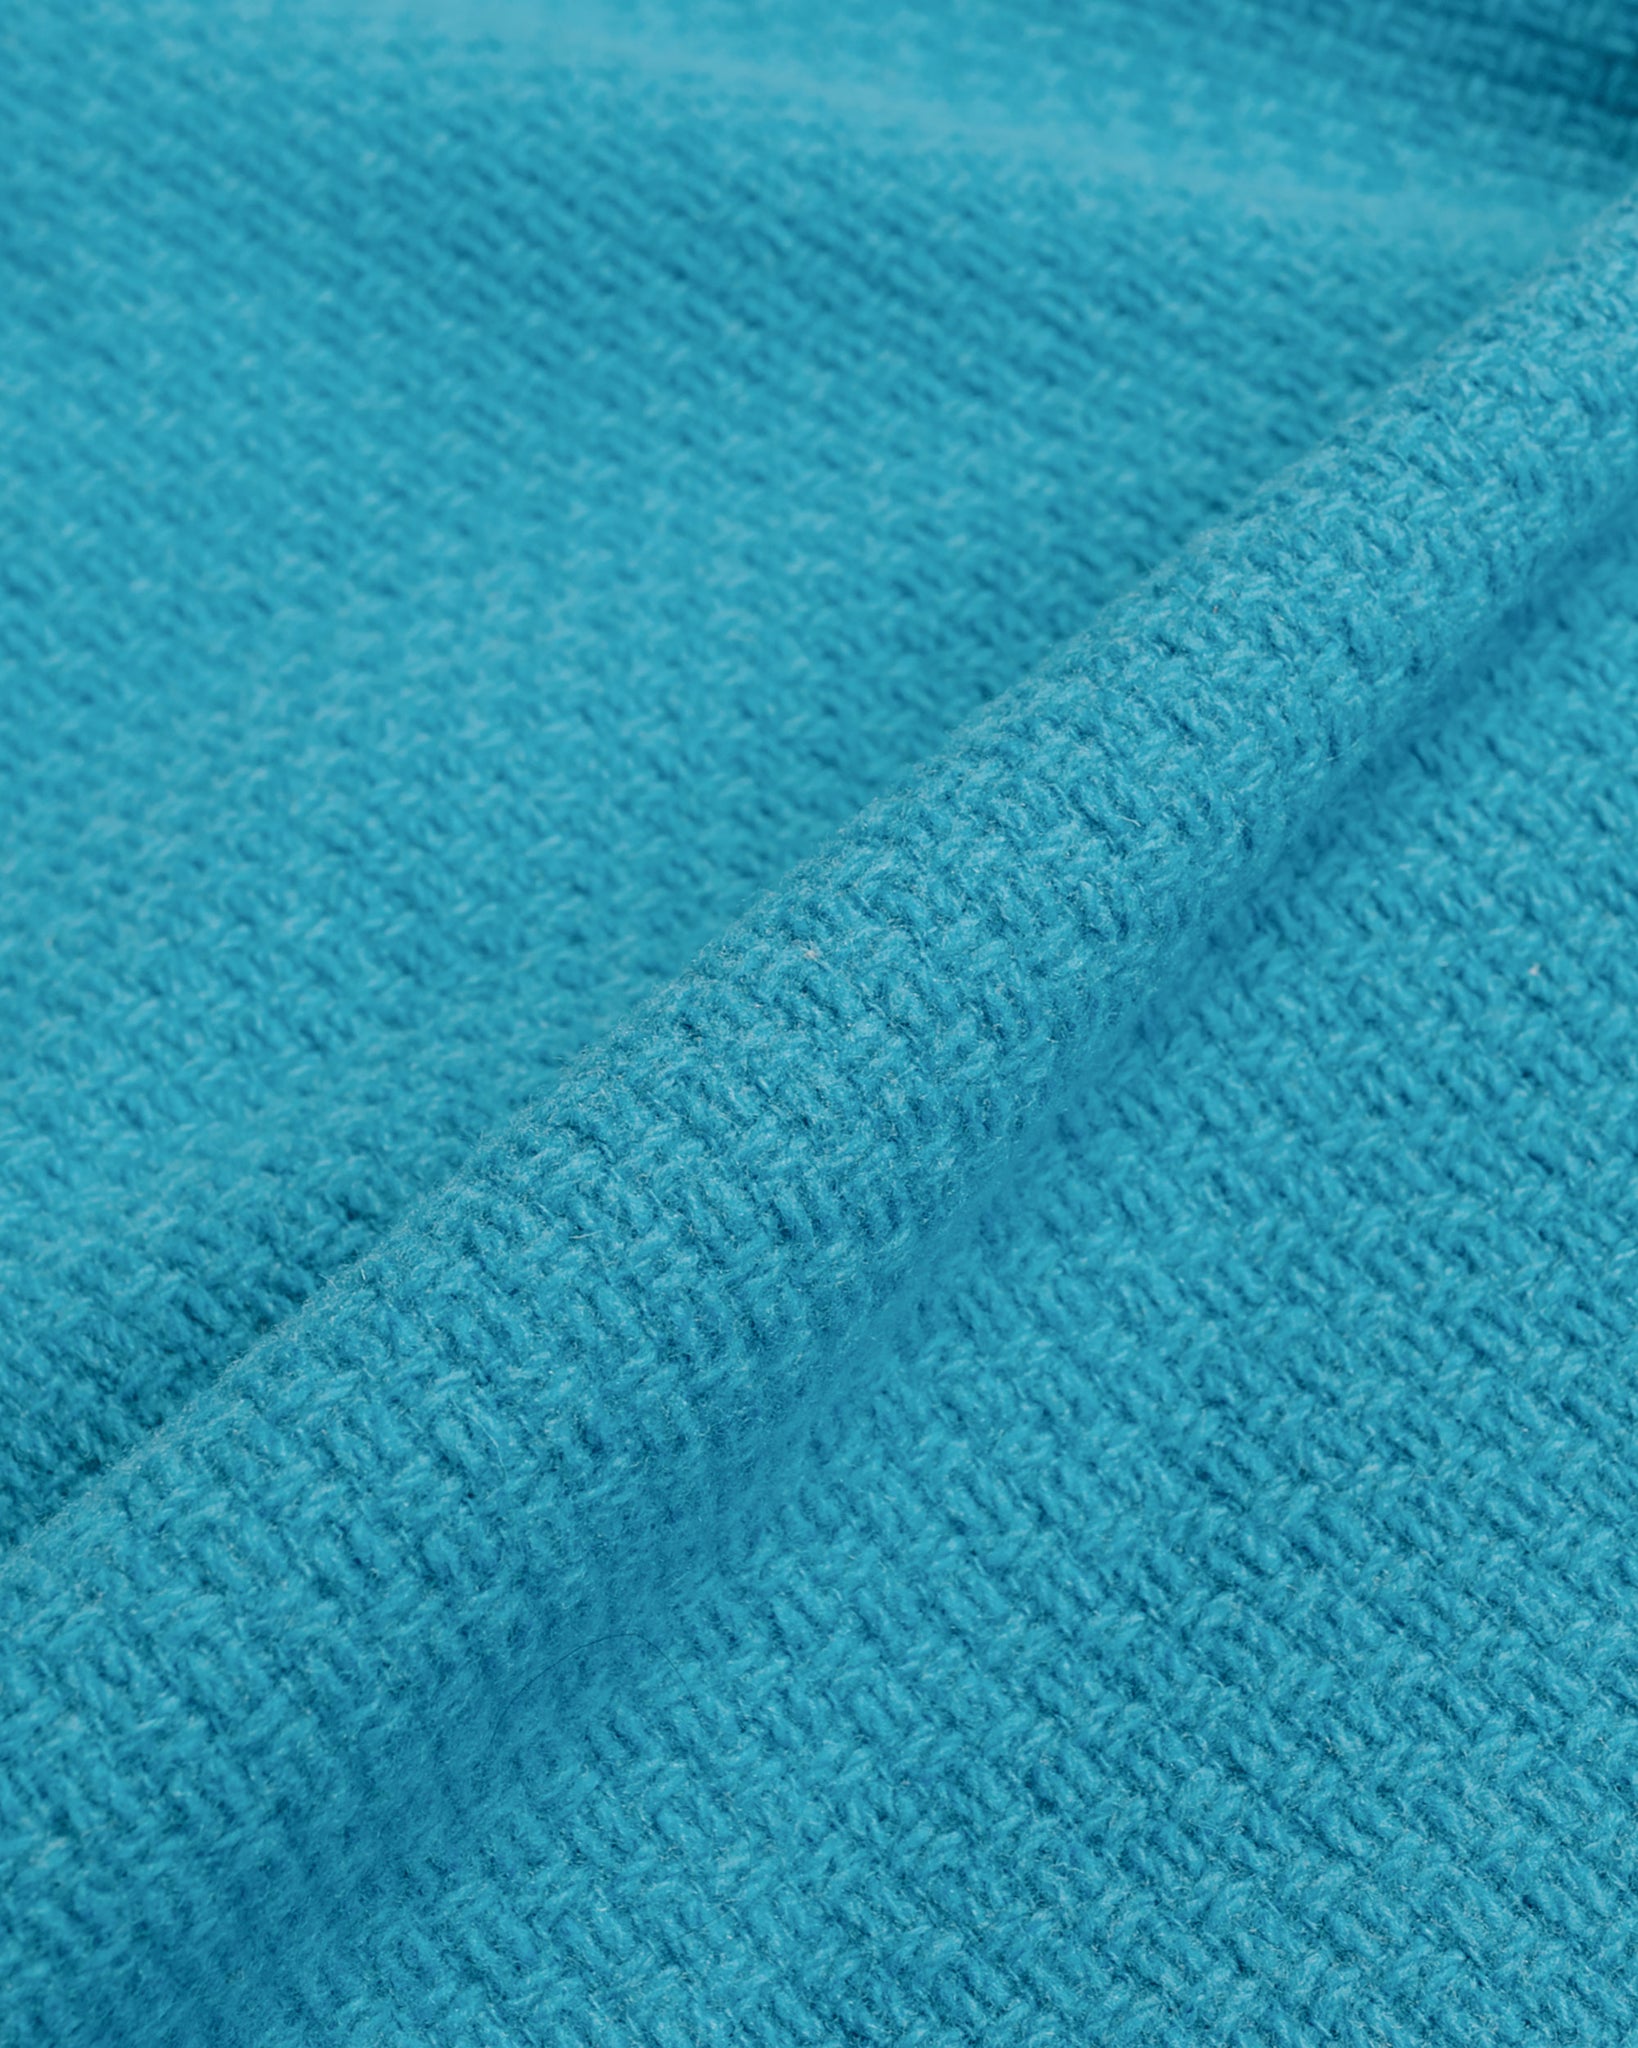 ts(s) Duffle Coat Basket Weave Dobby Cloth Blue fabric